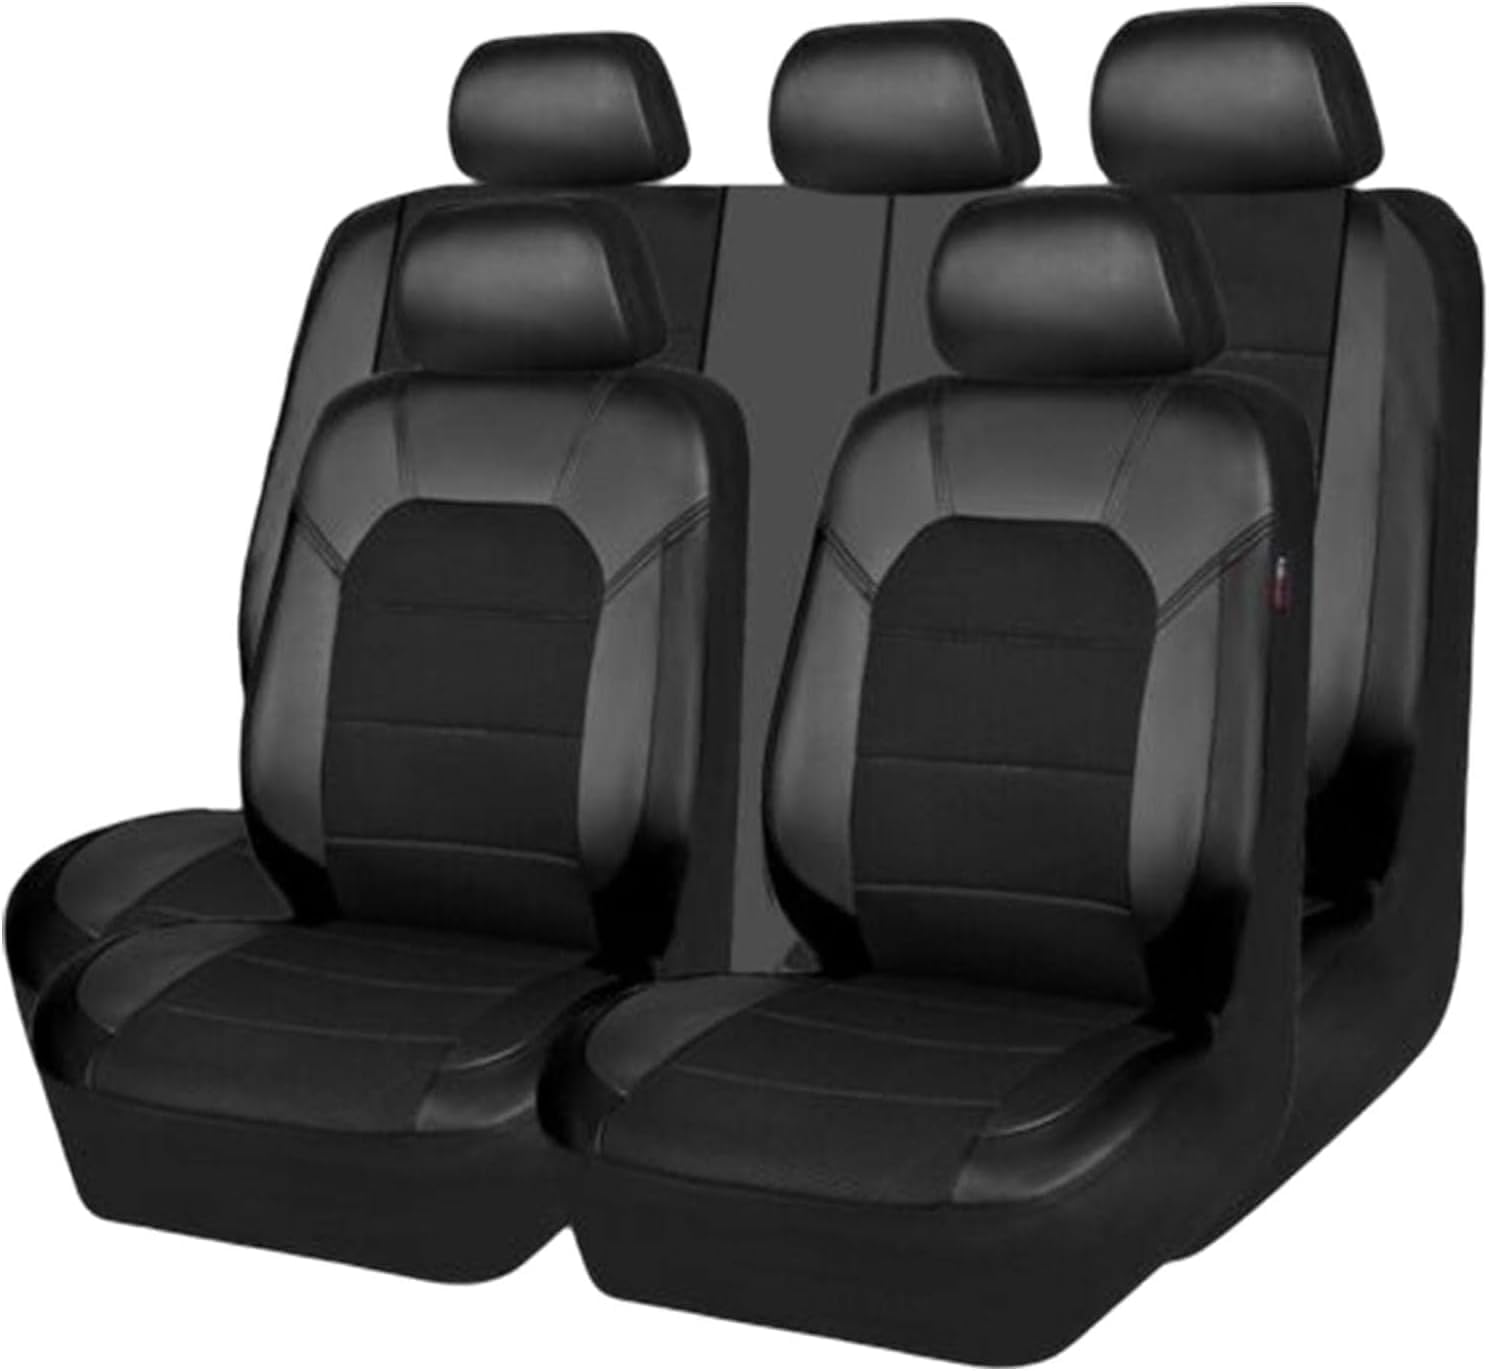 WEXY Leder Autositzbezüge Sets für Subaru Forester 2007-2012, 9-teiliges Set Sitzbezug Komplett-Set, Atmungsaktiv Komfortable Allwetter Autositzschoner,C/Black von WEXY